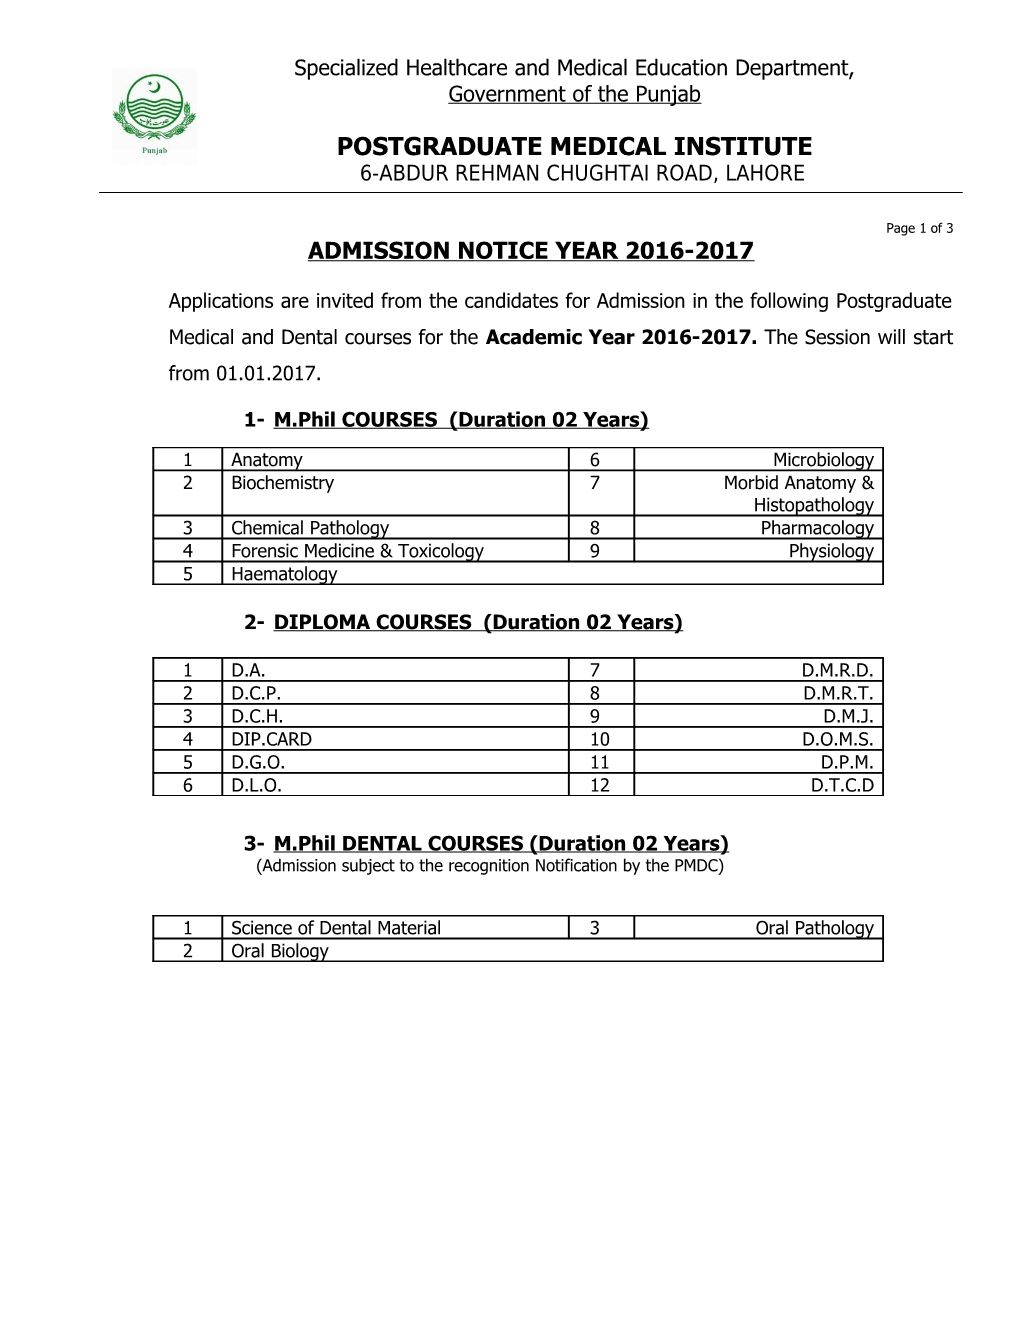 Admission Notice Year 2016-2017